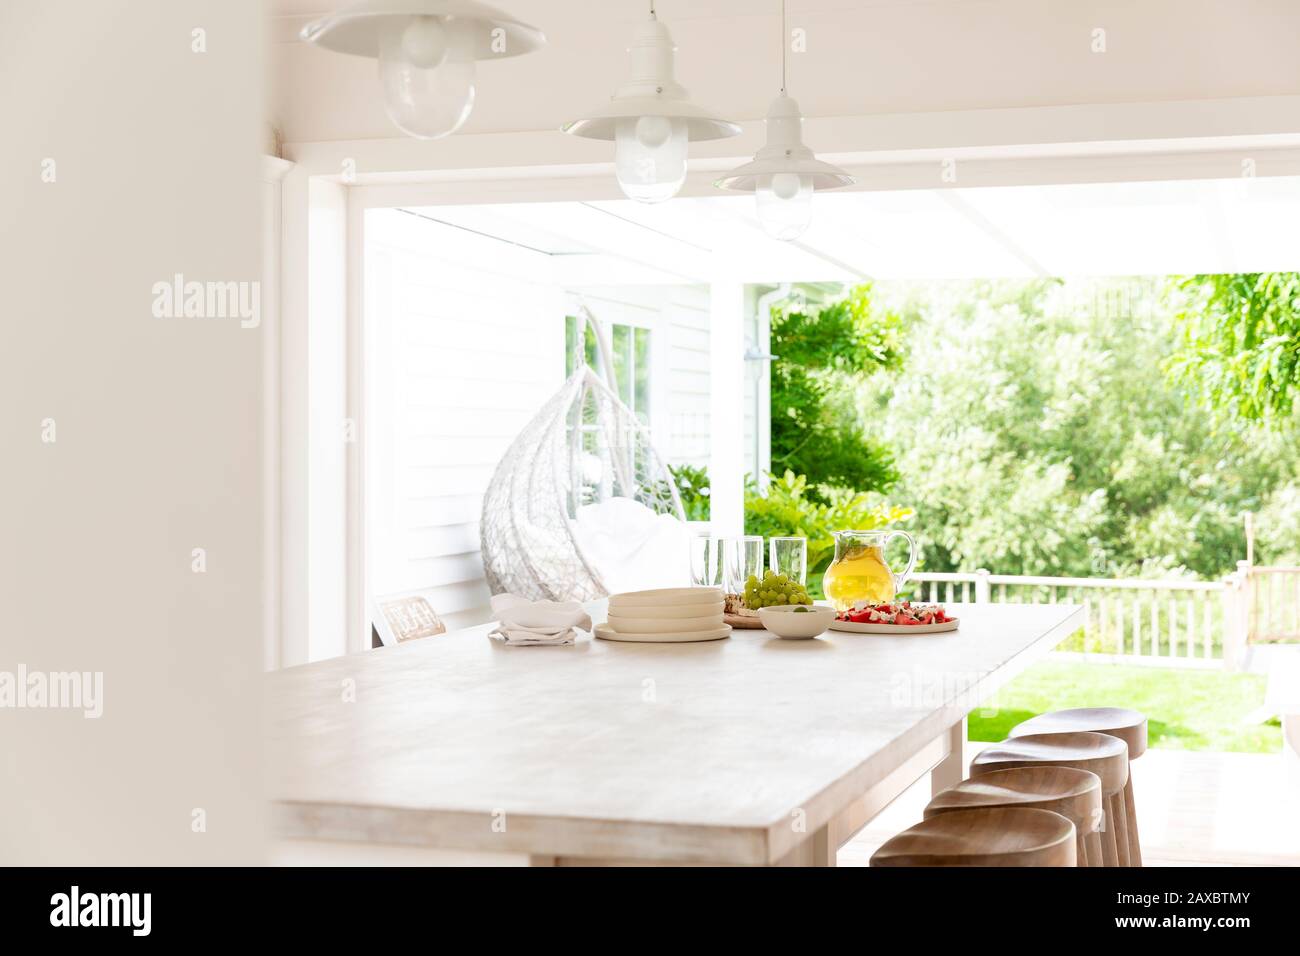 Home showcase kitchen open to summer patio Stock Photo